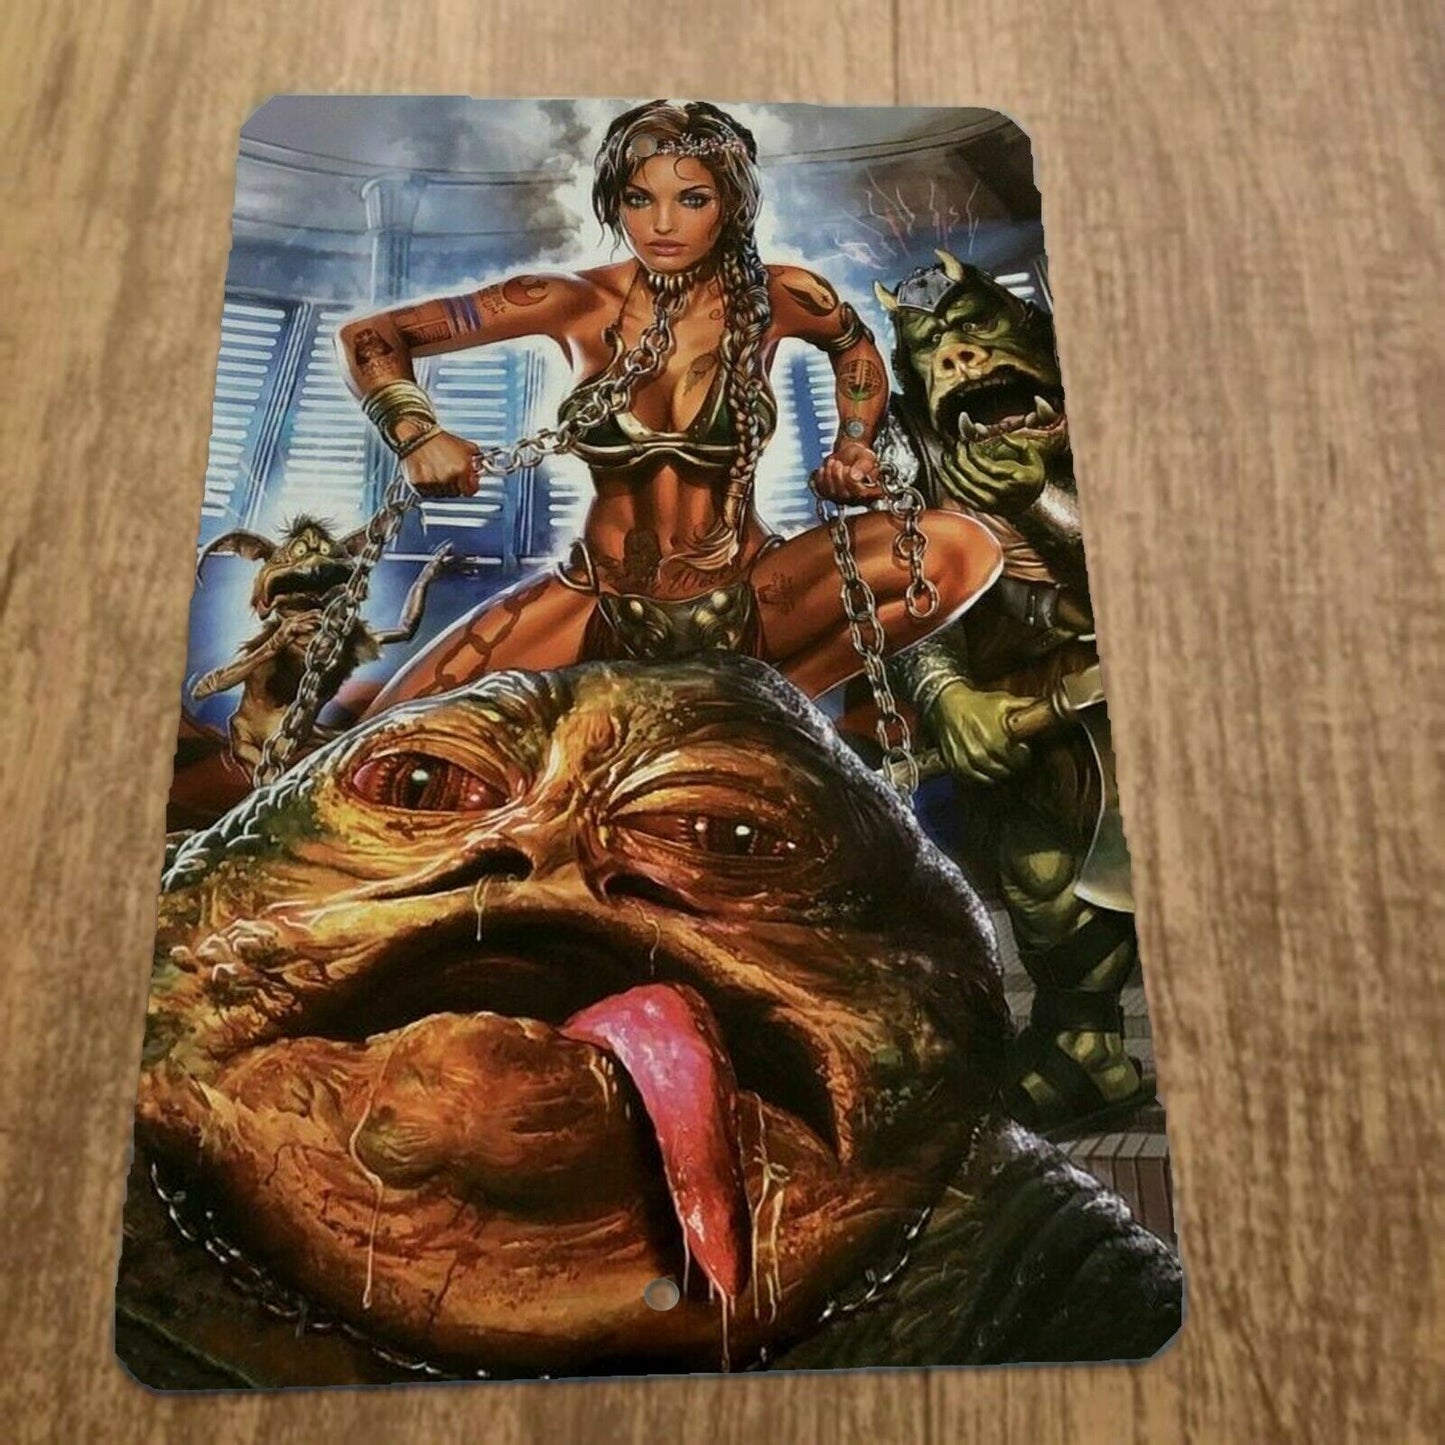 Star Wars Slave Princess Leia Choking Jabba The Hutt 8x12 Metal Wall Sign